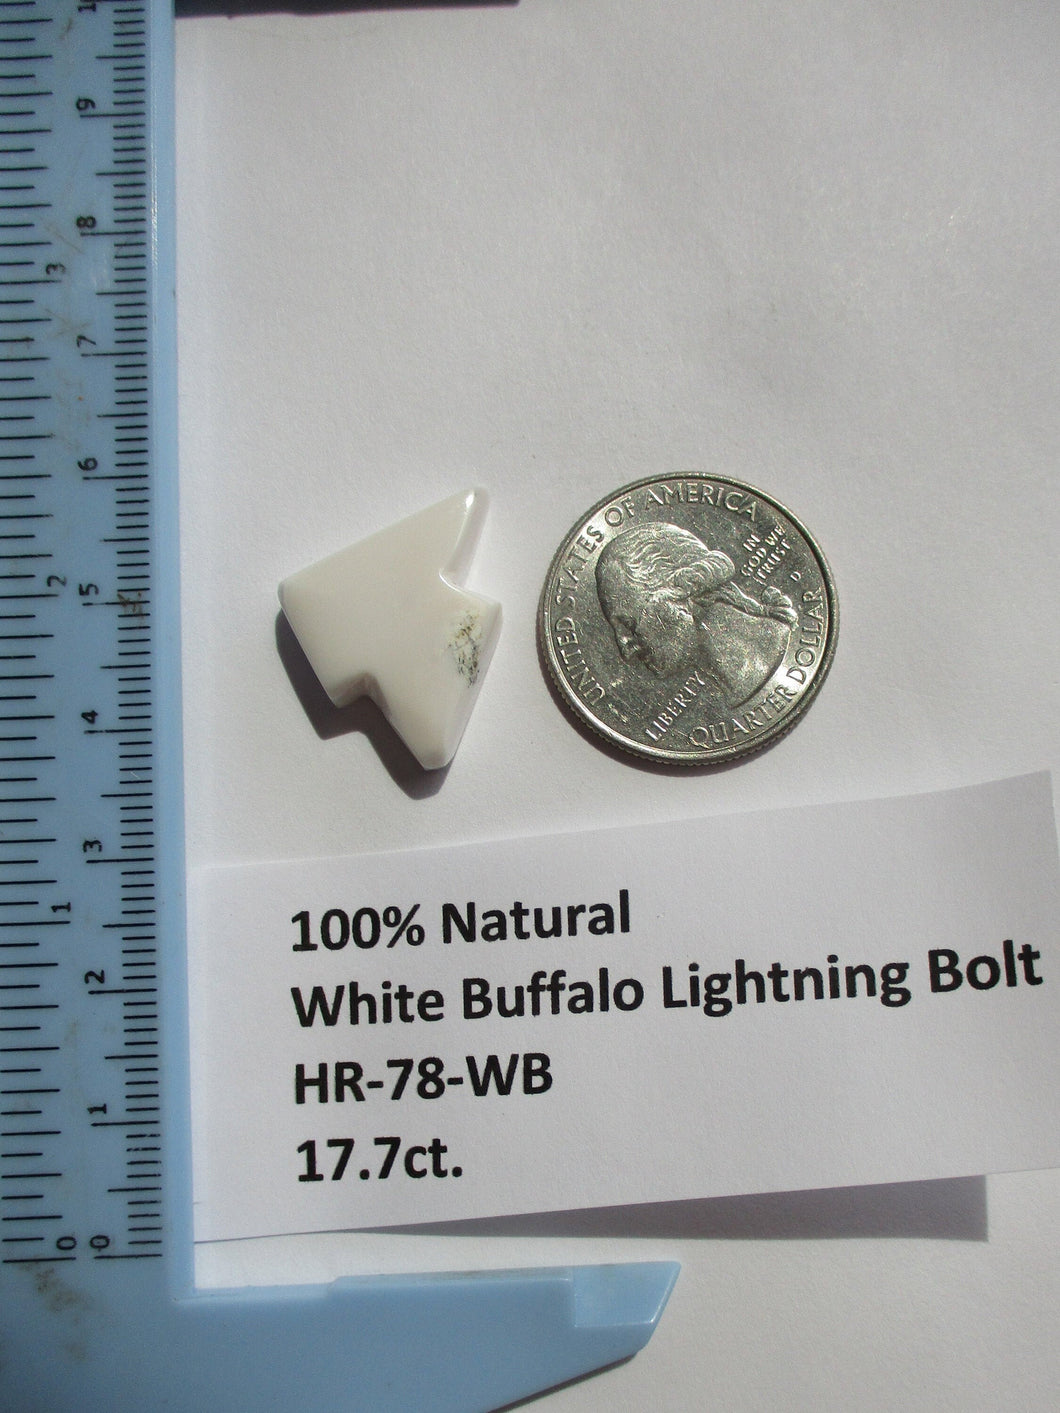 17.7 ct (23x19x6.5 mm) 100% Natural White Buffalo Lightning Bolt Cabochon Gemstone, HR 78